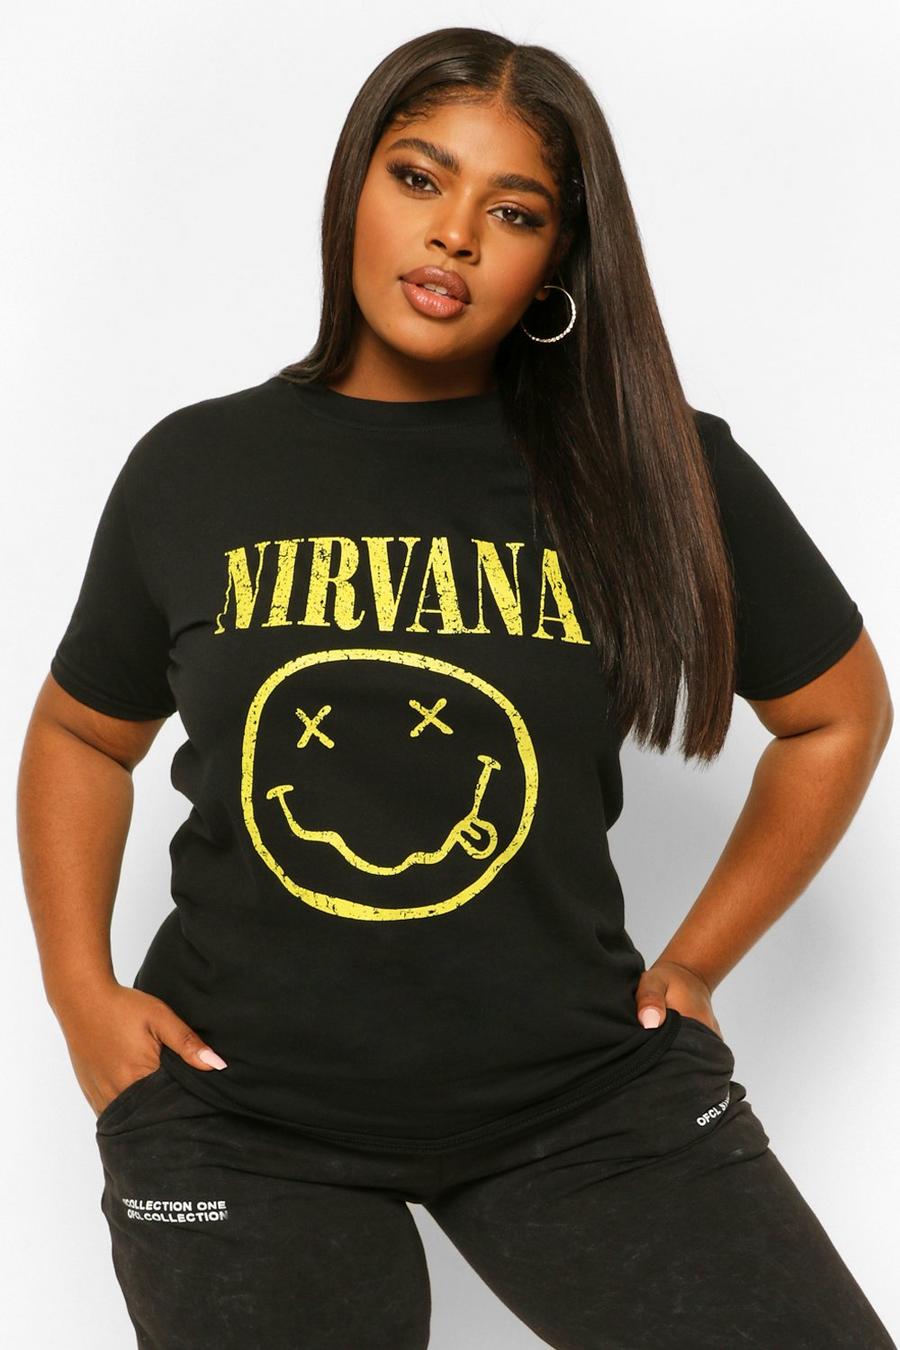 Black svart Plus Oversize Nirvana T-shirt med tryck och smiley